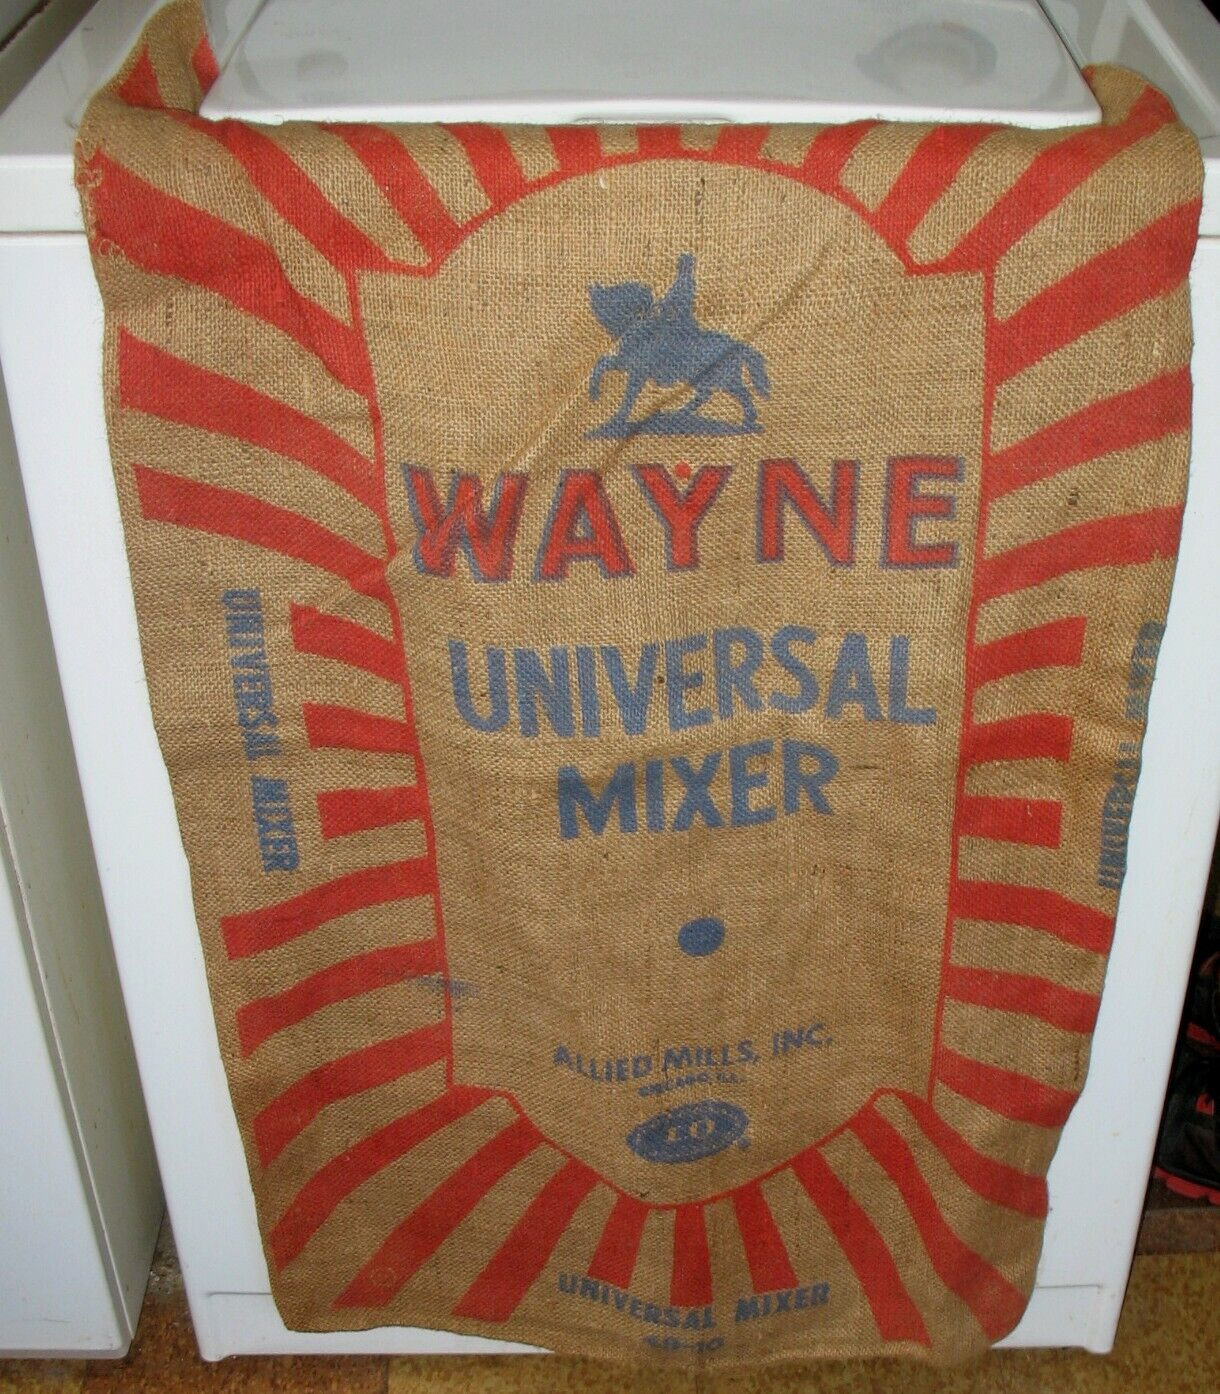  Vintage Advertising Burlap Potato Bag Sack WAYNES UNIVERSAL MIXER 100#  NICE